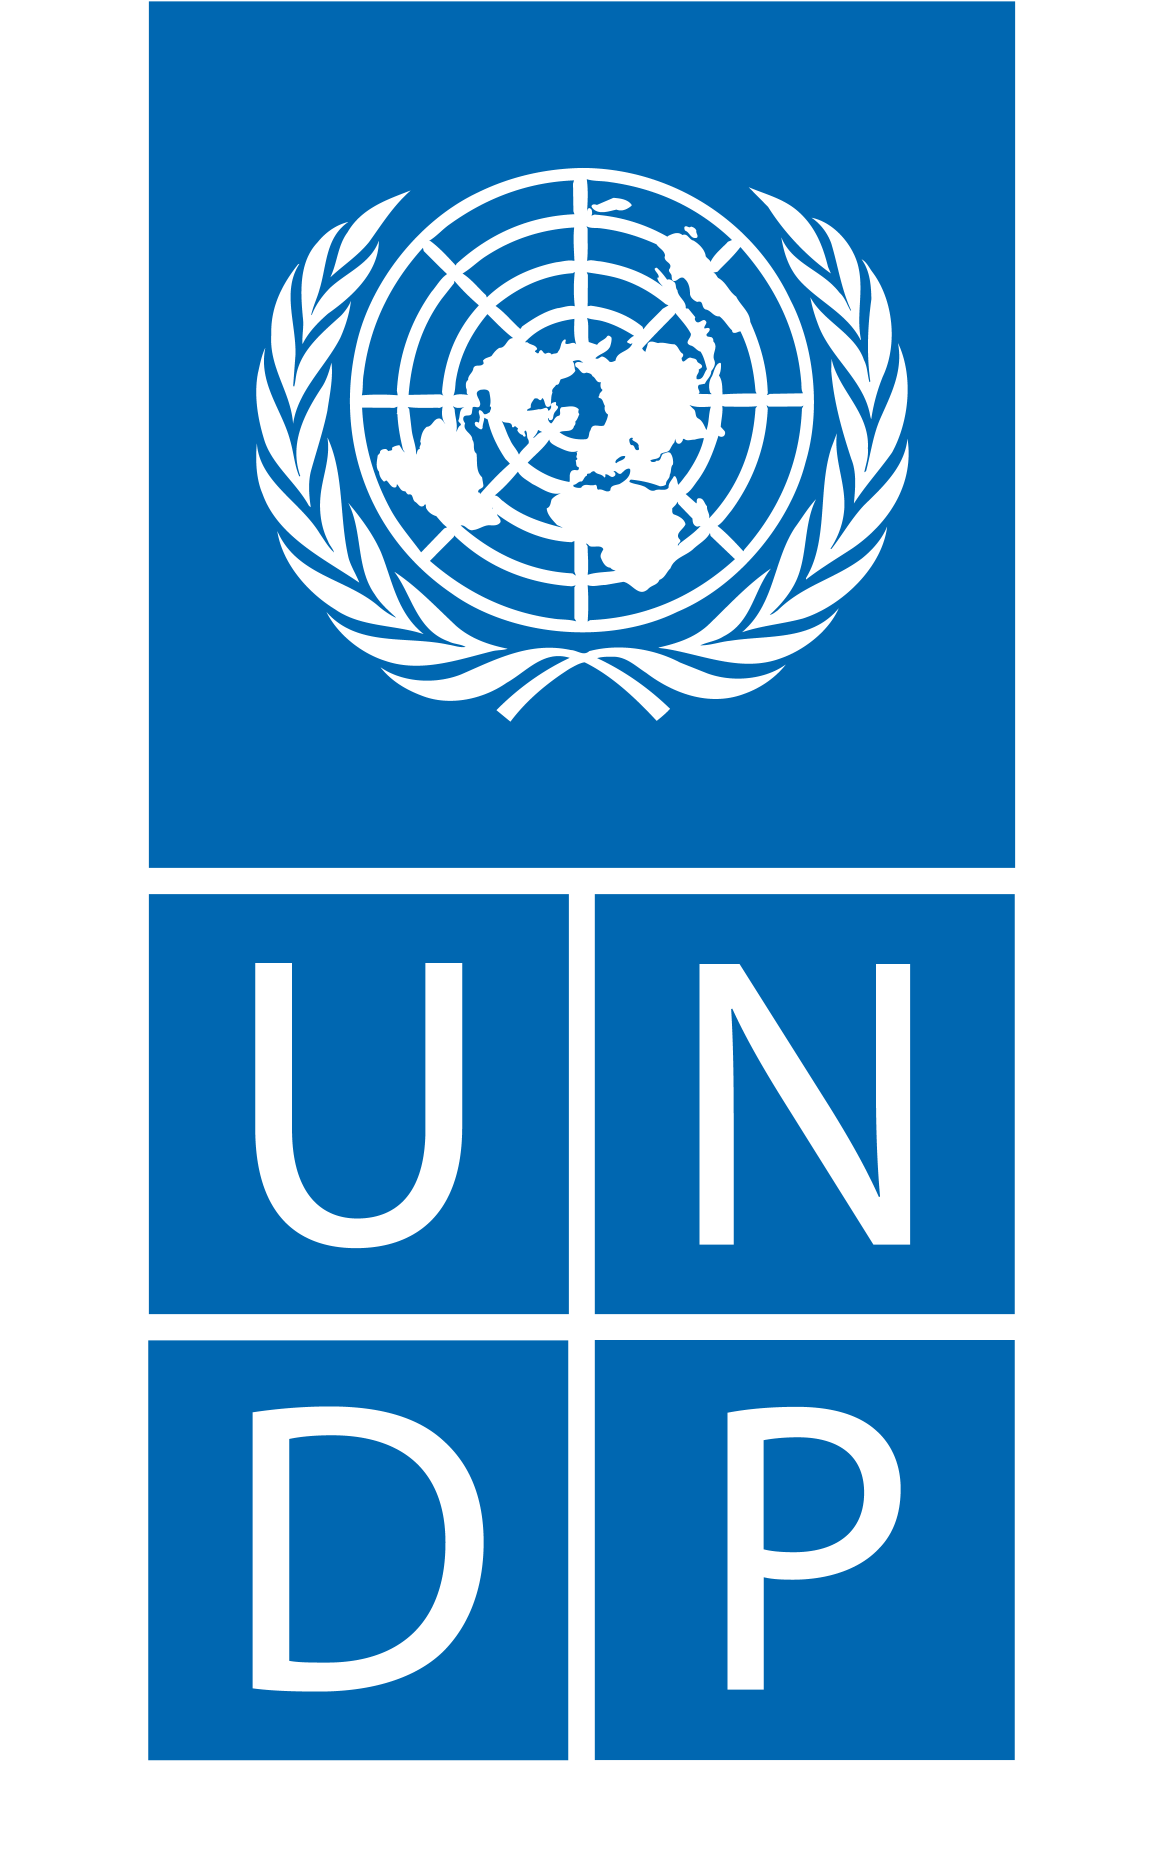 undp logo